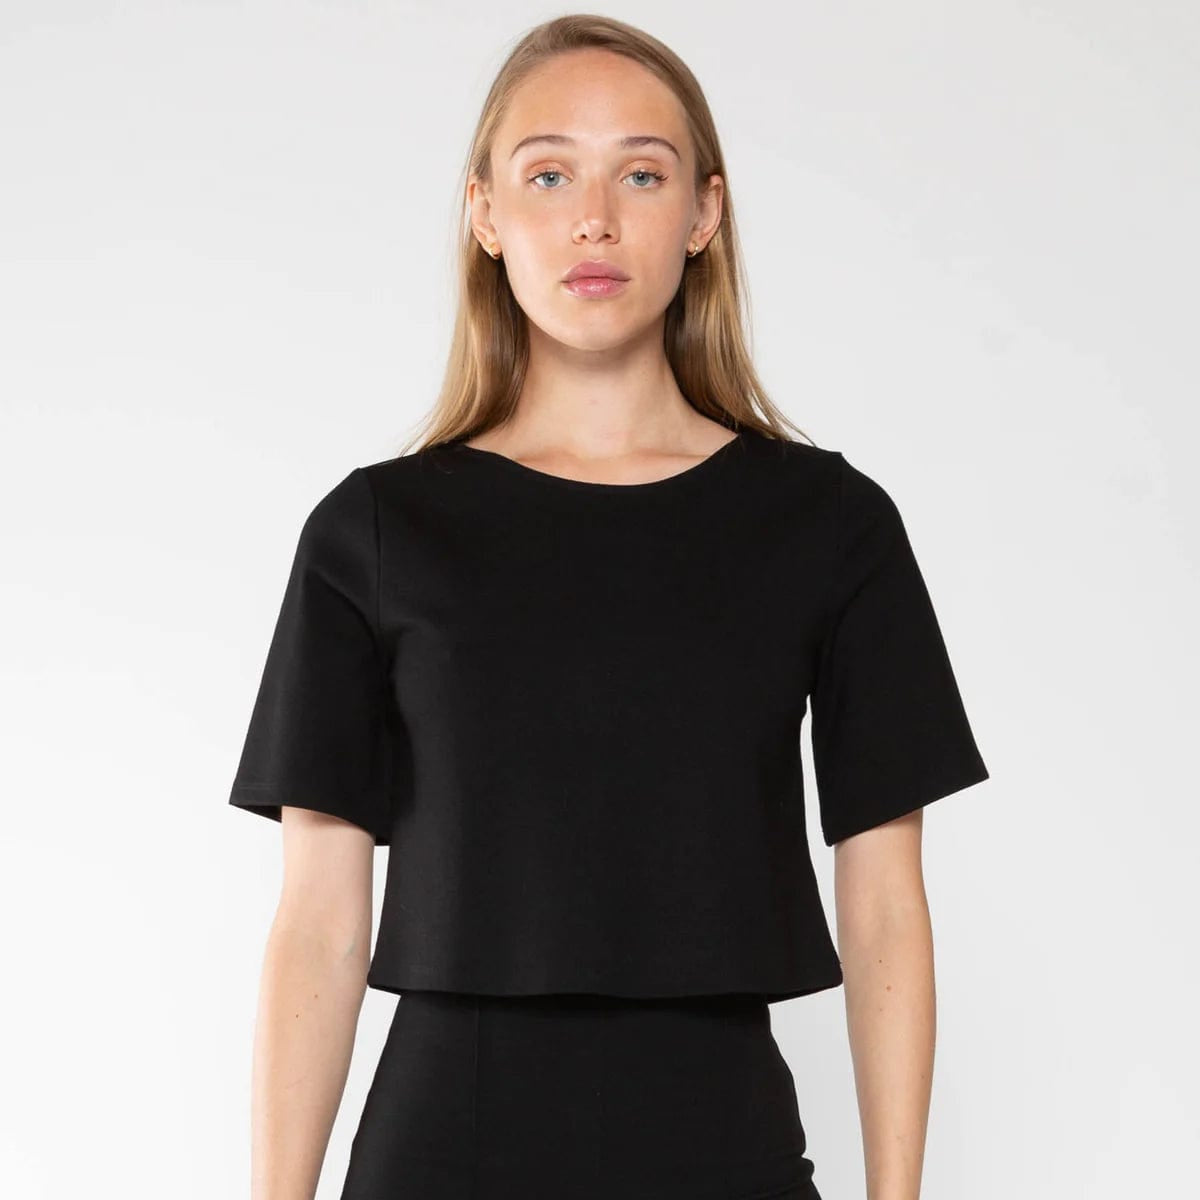 Ripley Rader Women's Shirts & Tops Black / 1 (XS) Ripley Rader Ponte Knit Short Sleeve Top